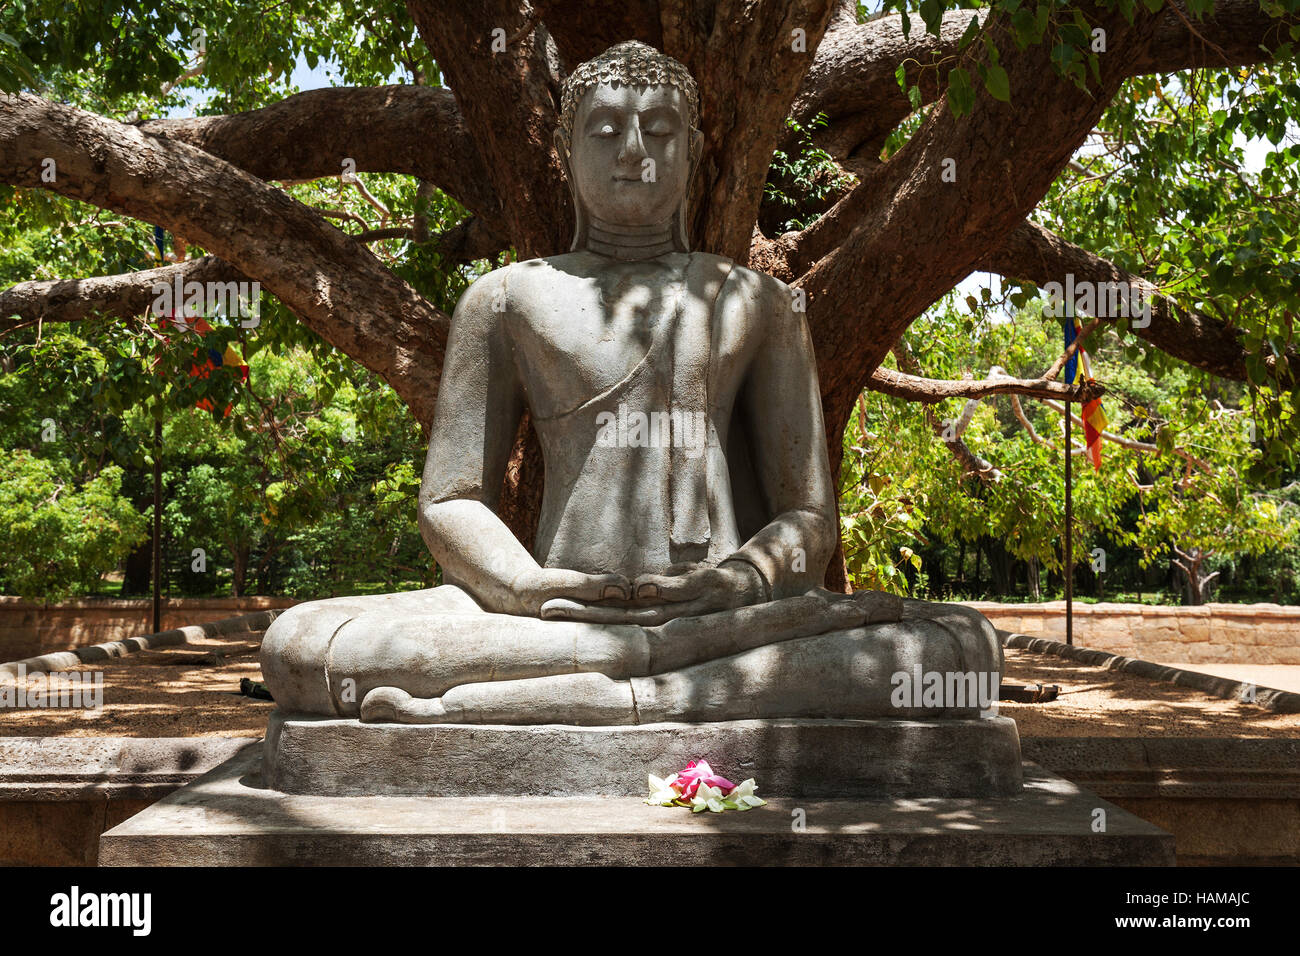 https://c8.alamy.com/comp/HAMAJC/buddha-statue-seated-buddha-under-bodhi-tree-ficus-religiosa-sacred-HAMAJC.jpg